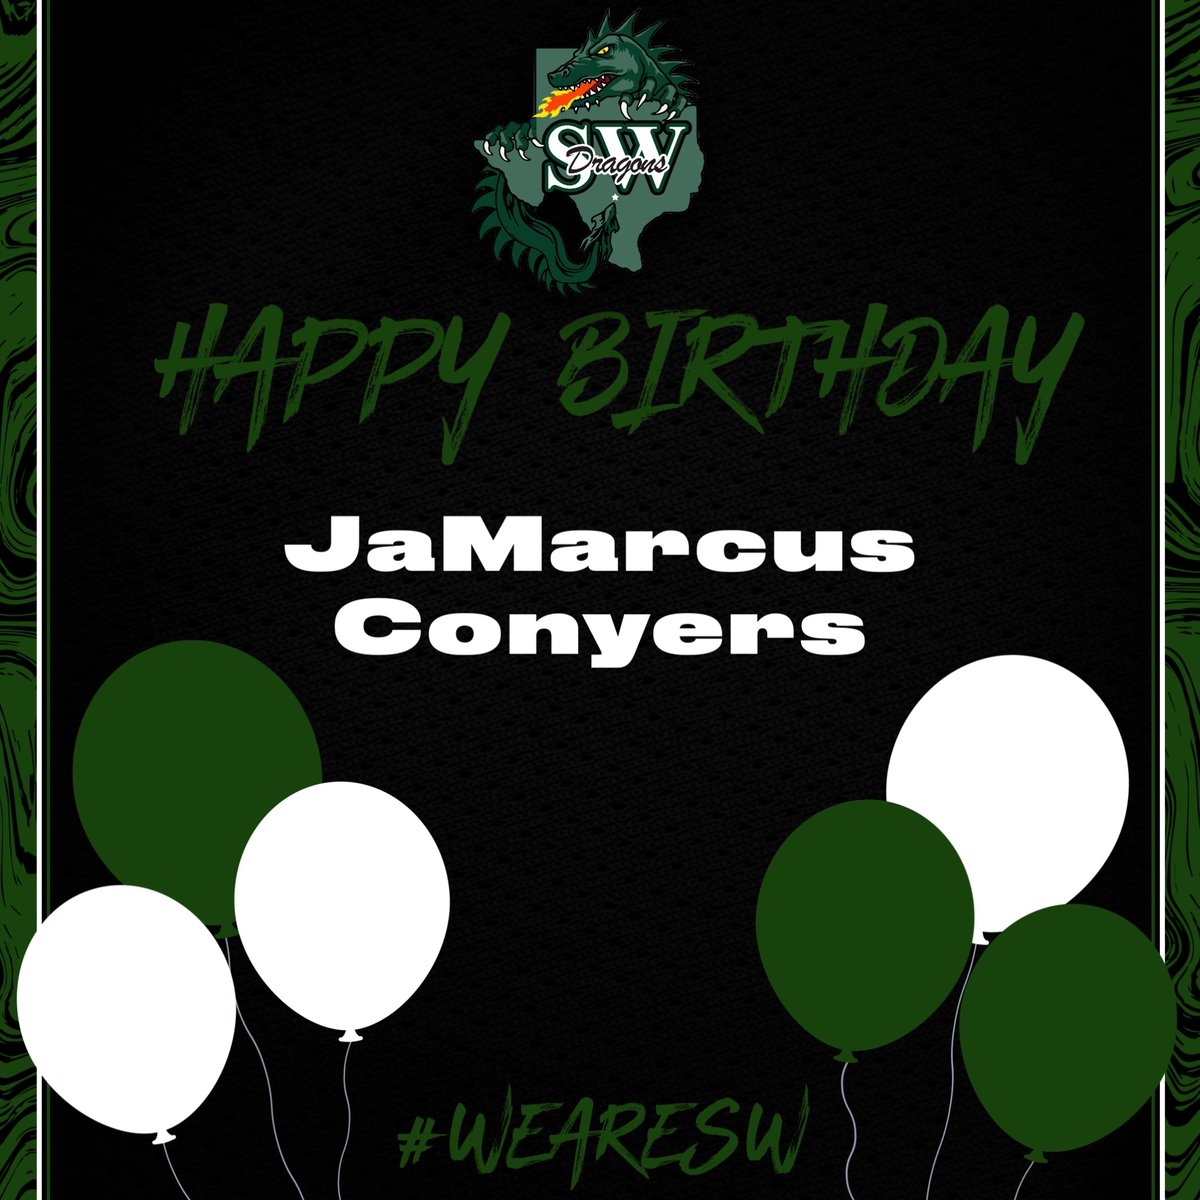 Happy Birthday JaMarcus Conyers!! #WeAreSW #DragonPride #OWOH #AAAO